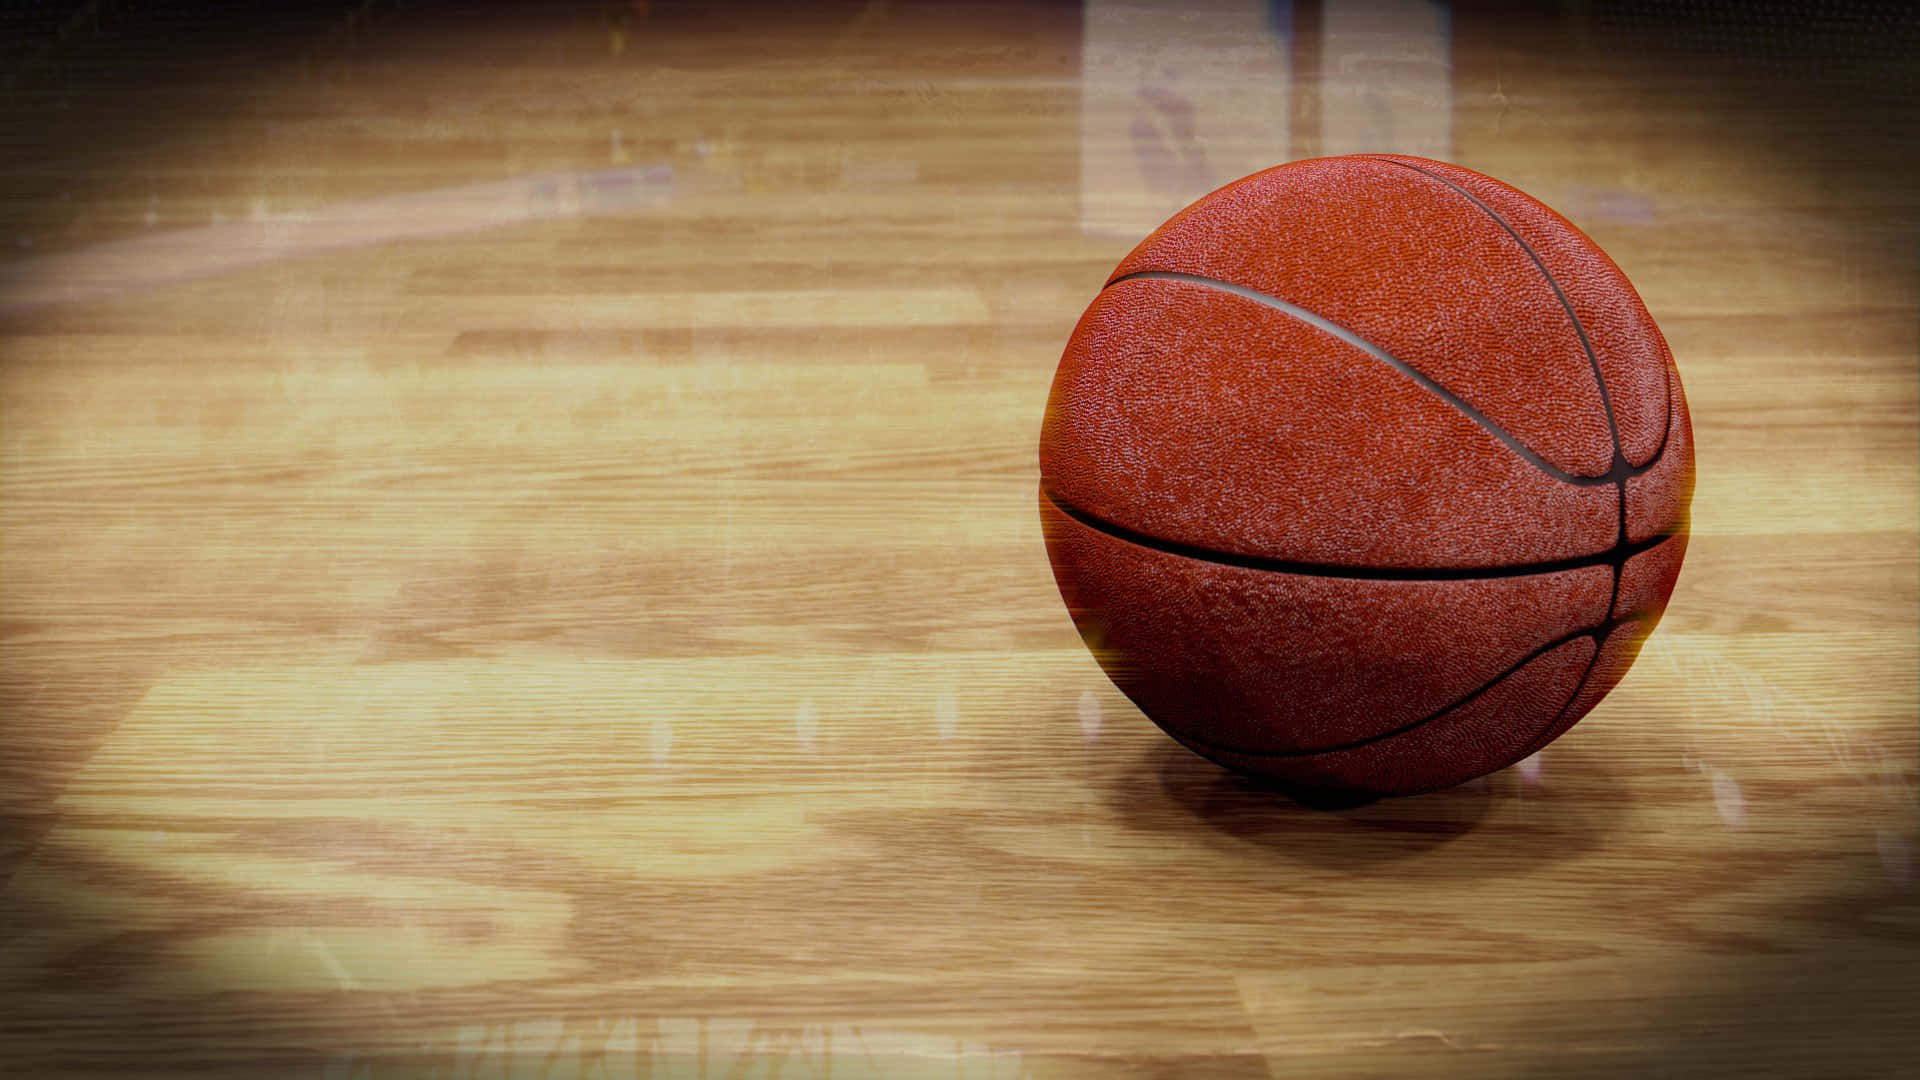 A Basketball Ball On A Wooden Floor